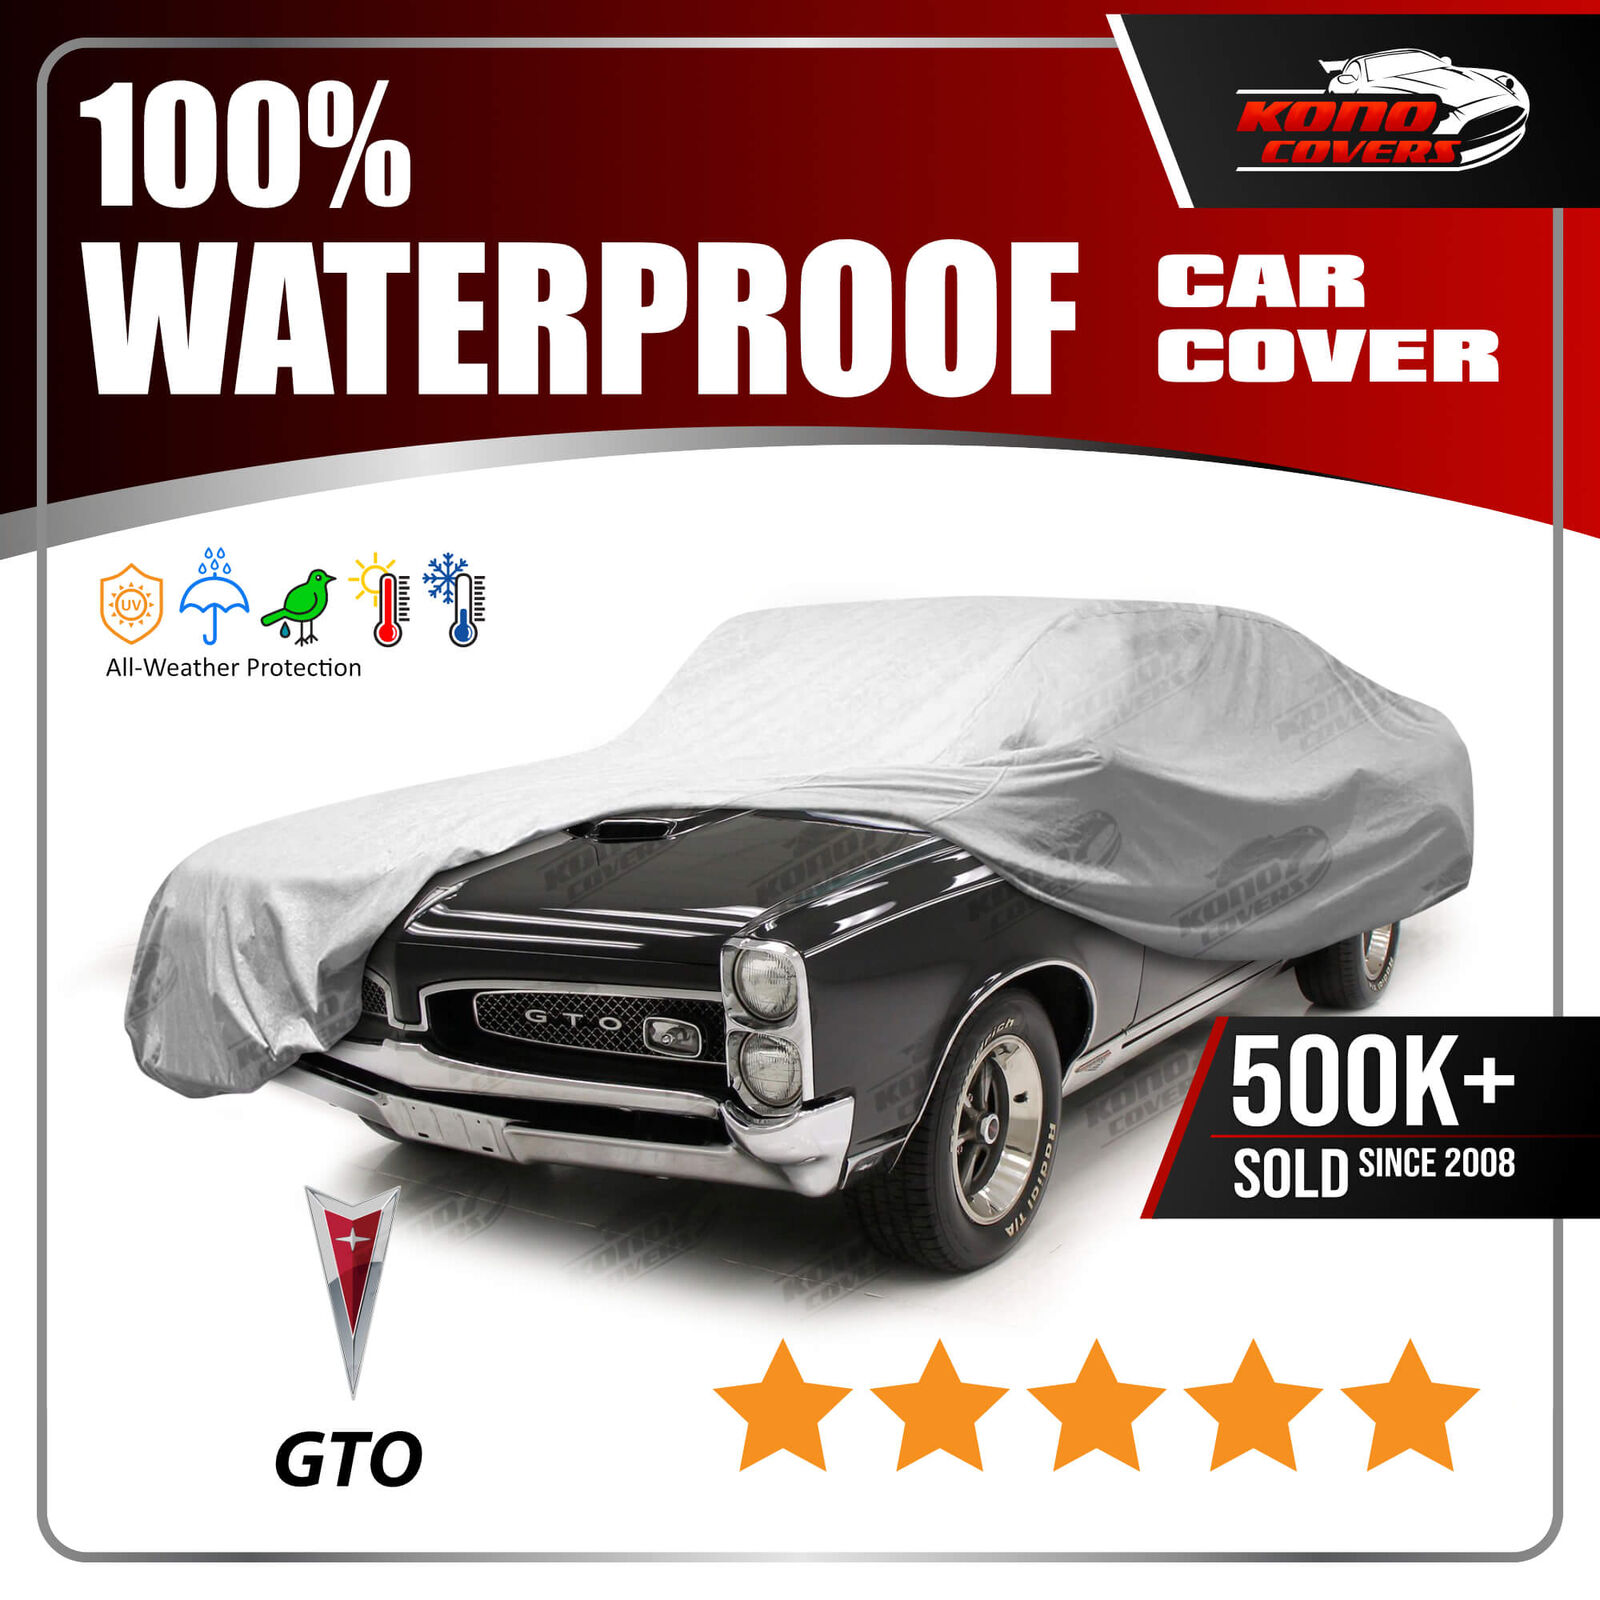 PONTIAC GTO 1964-1967 CAR COVER - 100% Waterproof 100% Breathable